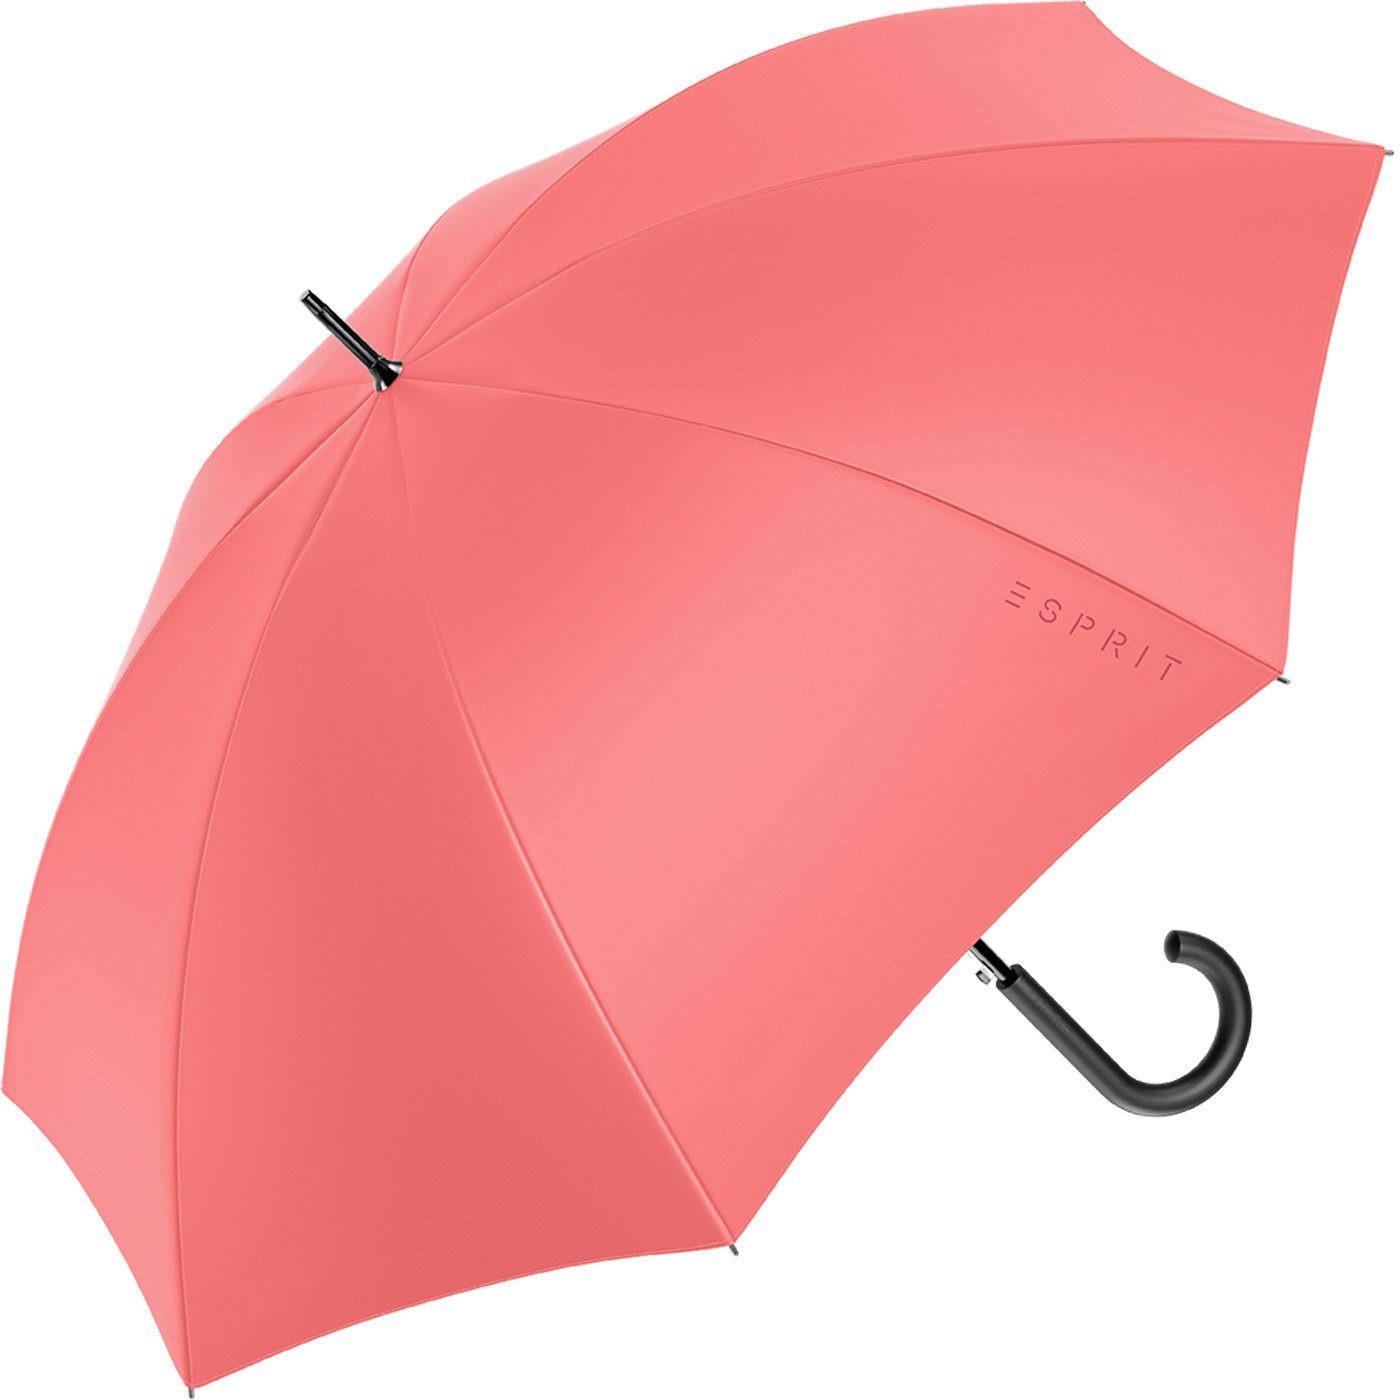 Esprit Langregenschirm Damen-Regenschirm mit den koralle stabil, 2023, Automatik und groß FJ Trendfarben in